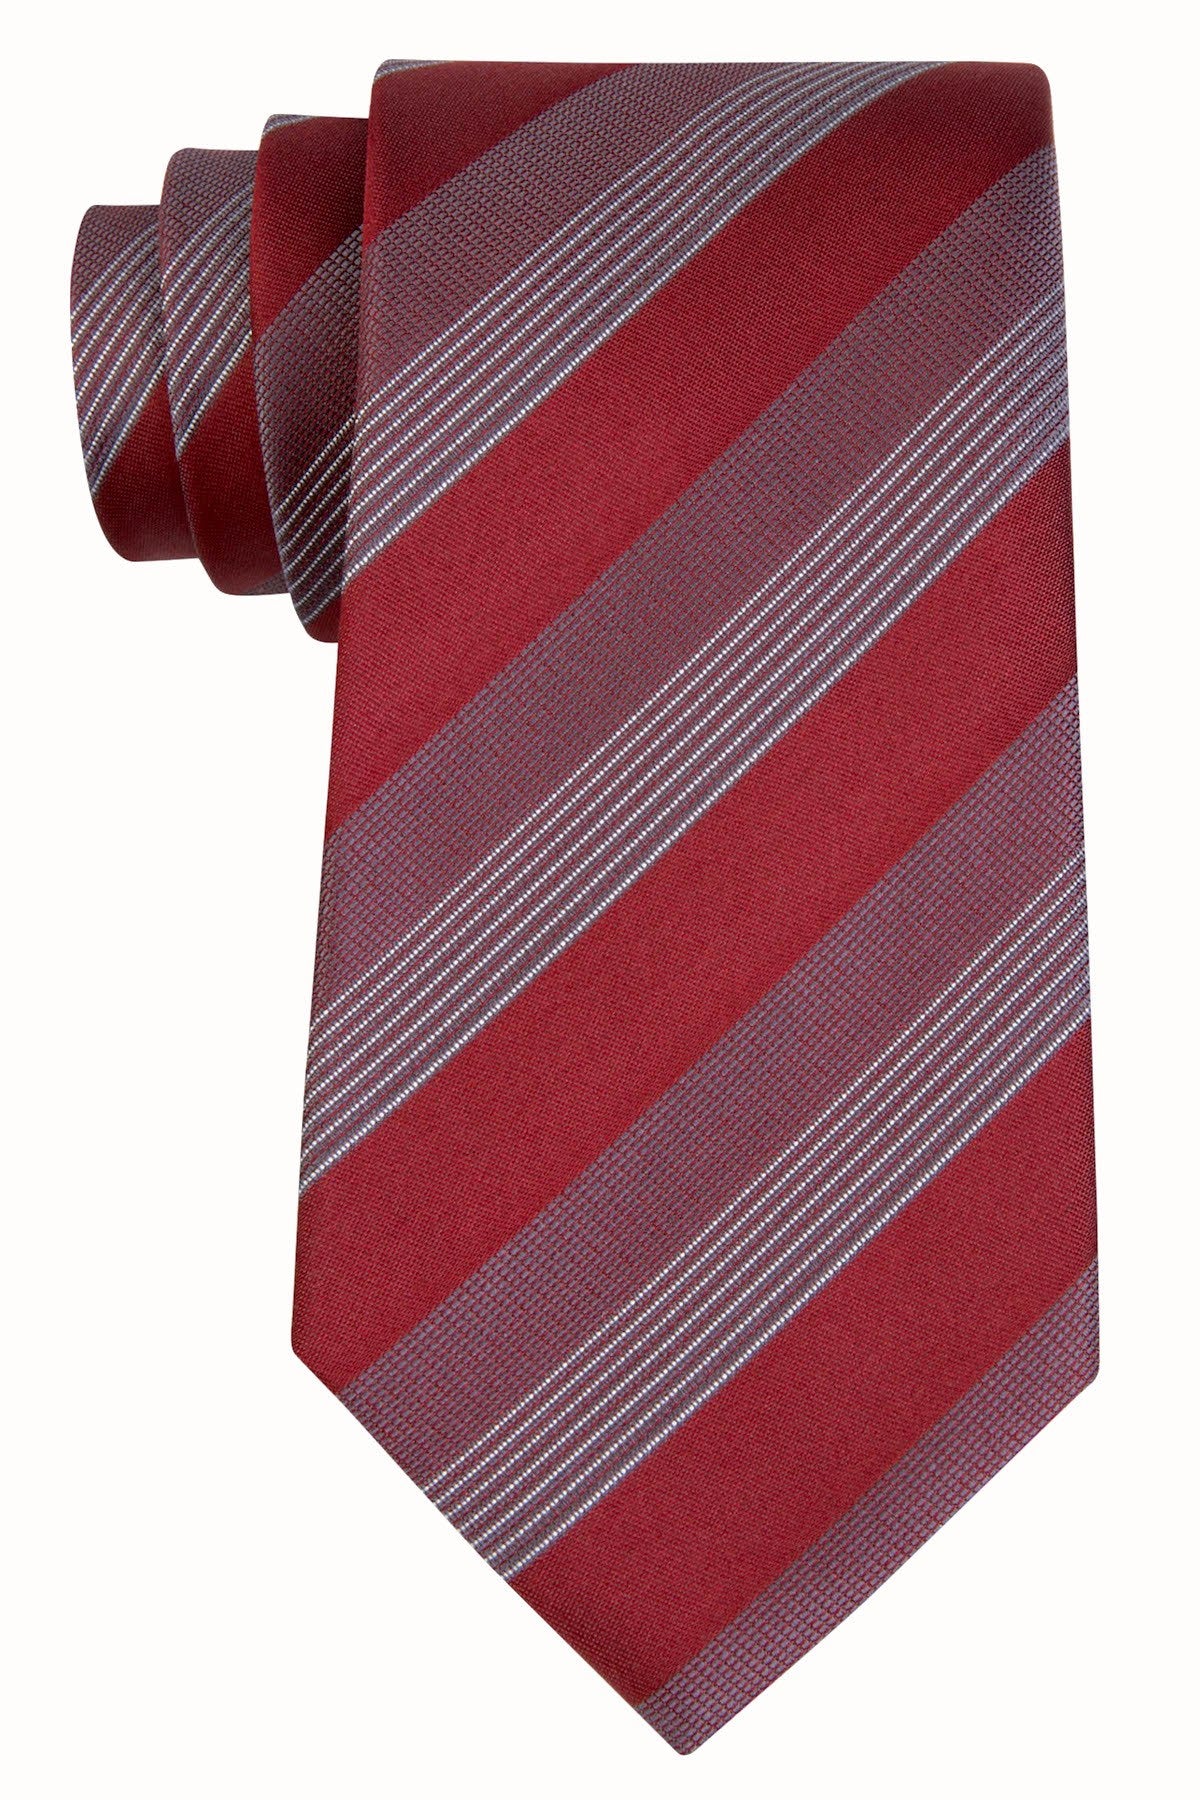 Kenneth Cole Reaction Red Elegant Stripe Tie